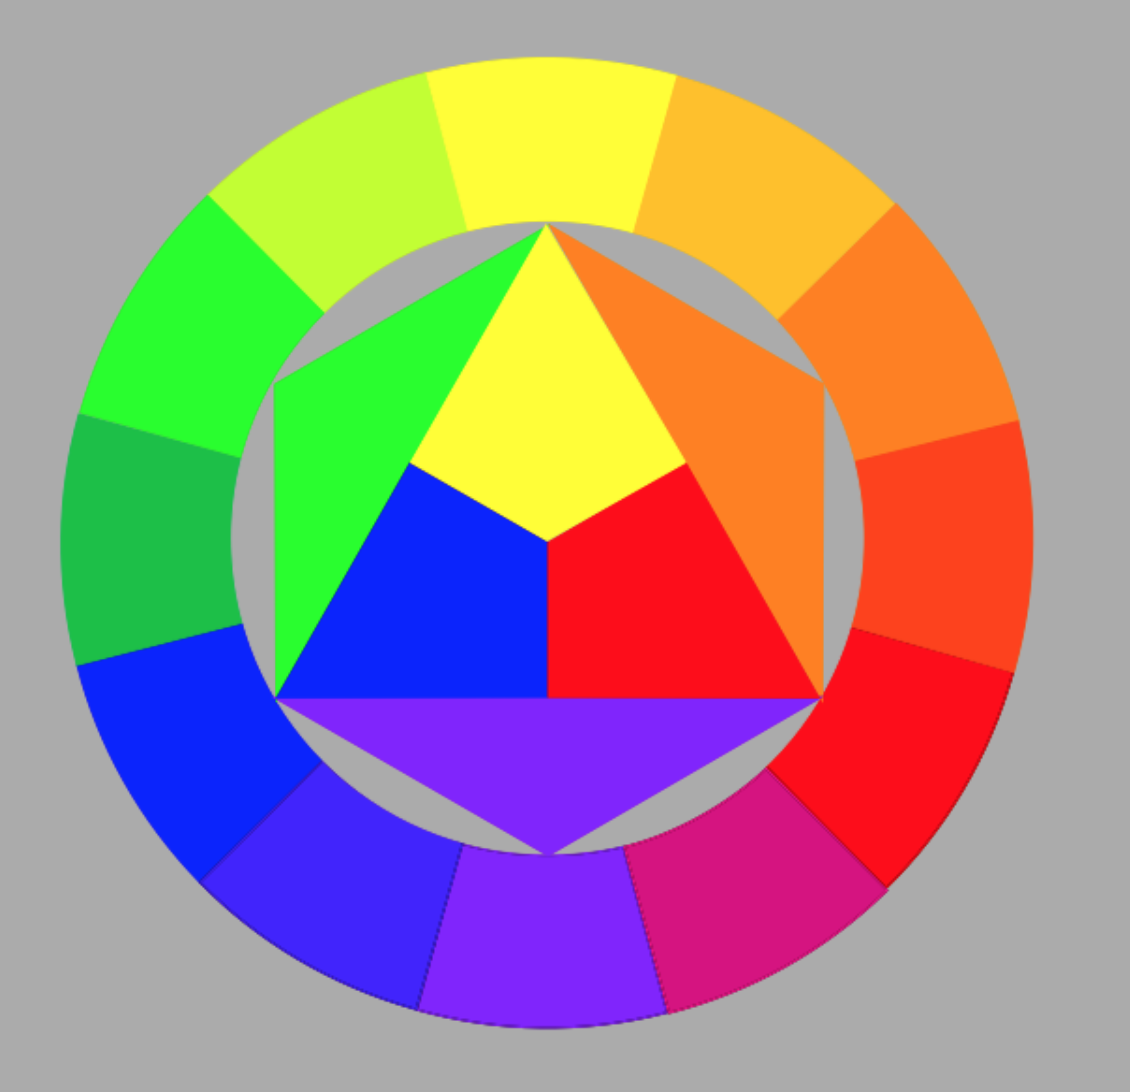 Иоганнес Иттен цветовой круг. Теория Иттена. Цветовой круг Иттена. Цветовая теория Иттена. Круг иттена это